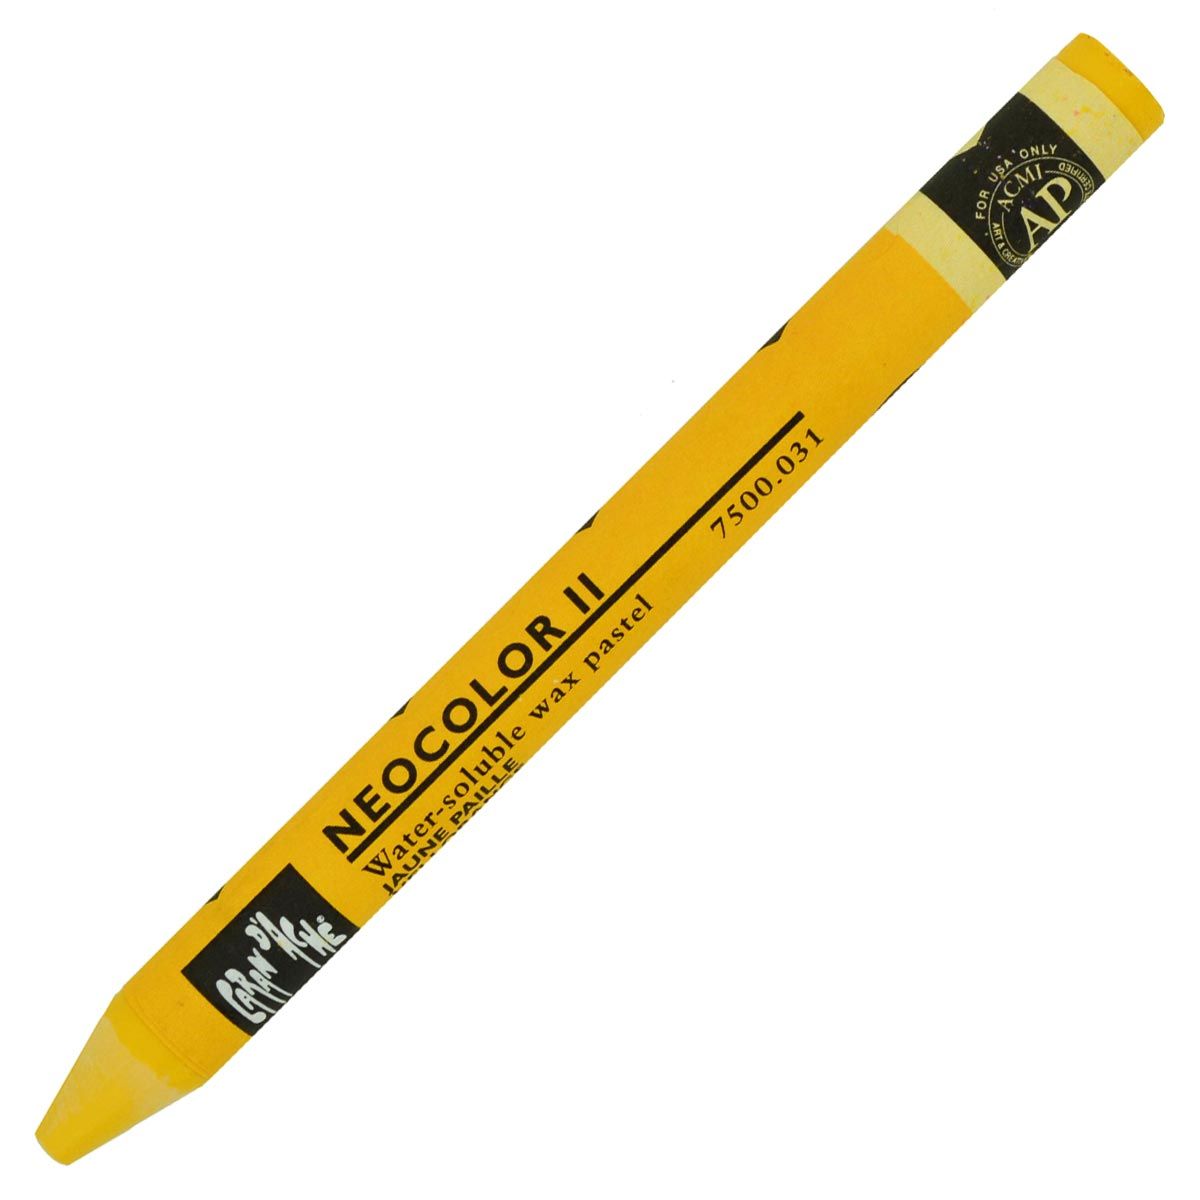 Neocolor II Aquarelle Artists’ Crayon - Orangish Yellow 031